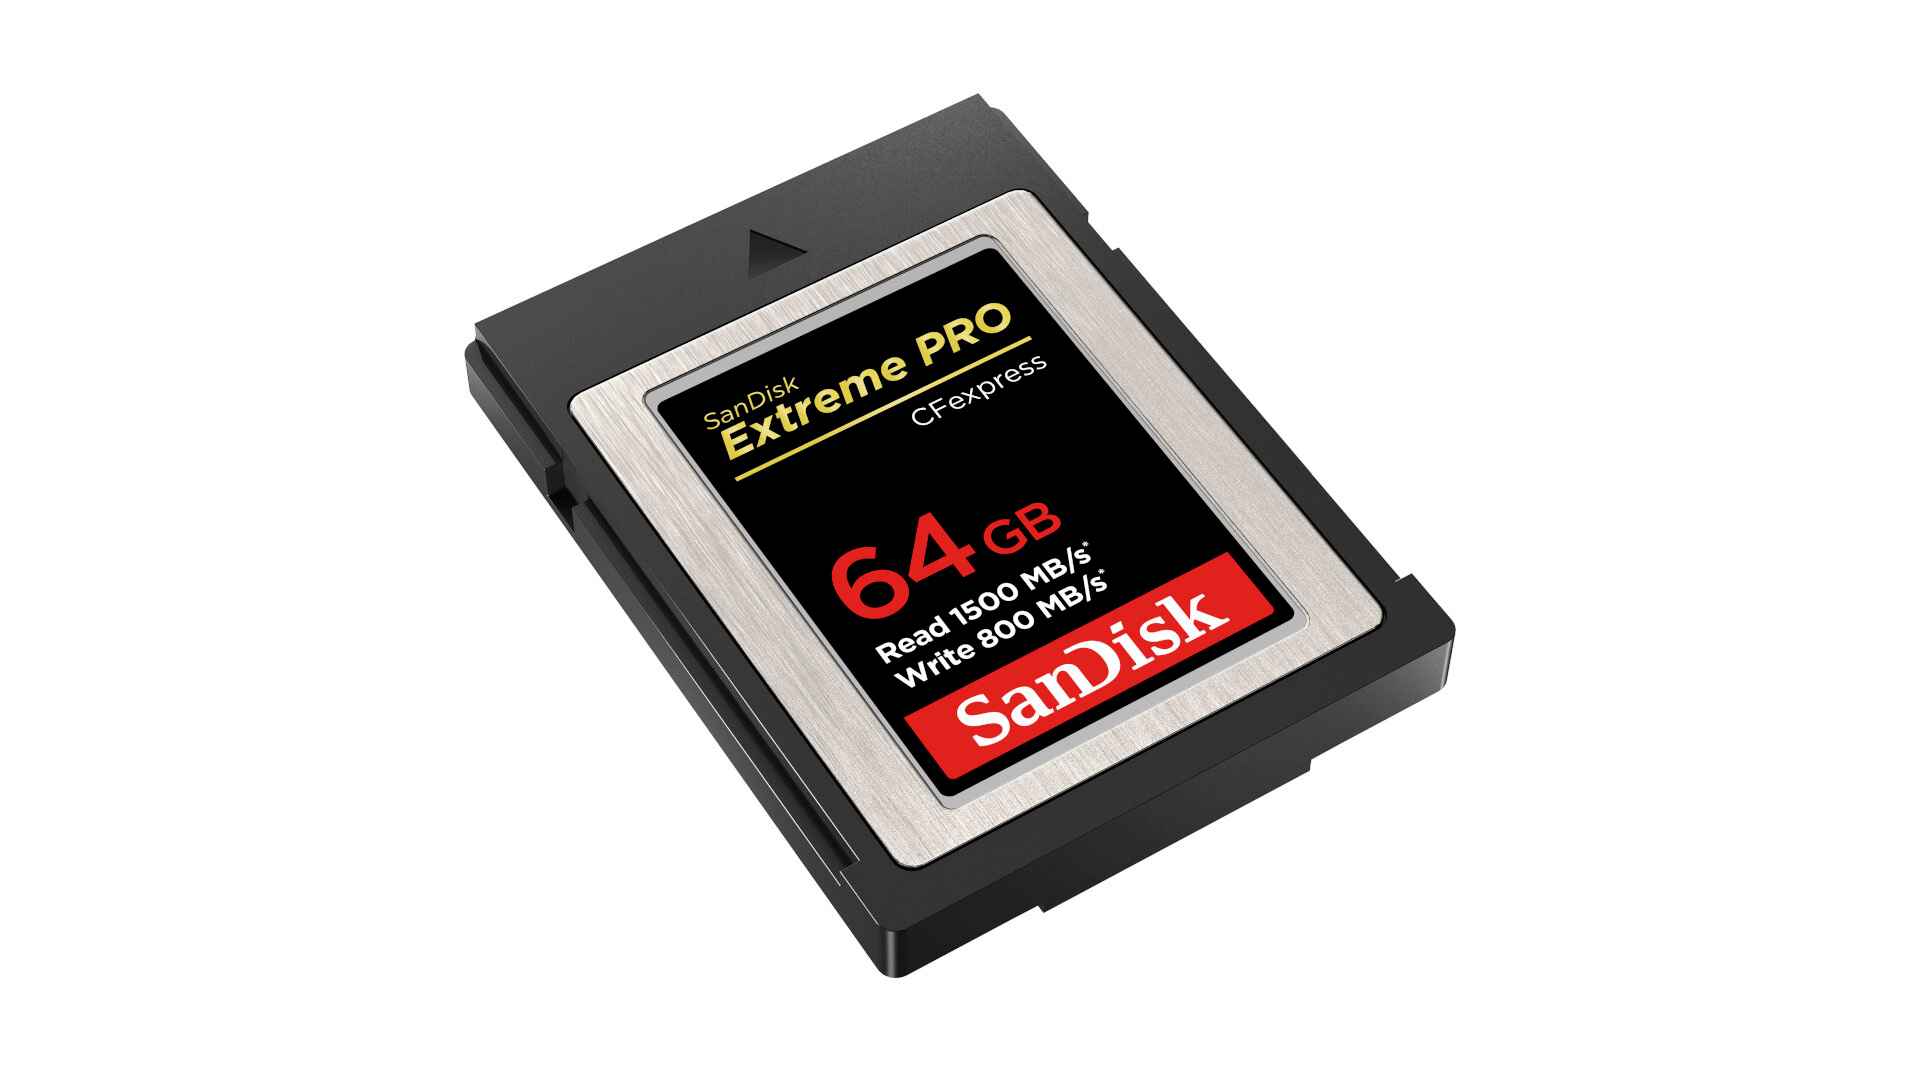 SANDISK Extreme Pro CFexpress 64GB